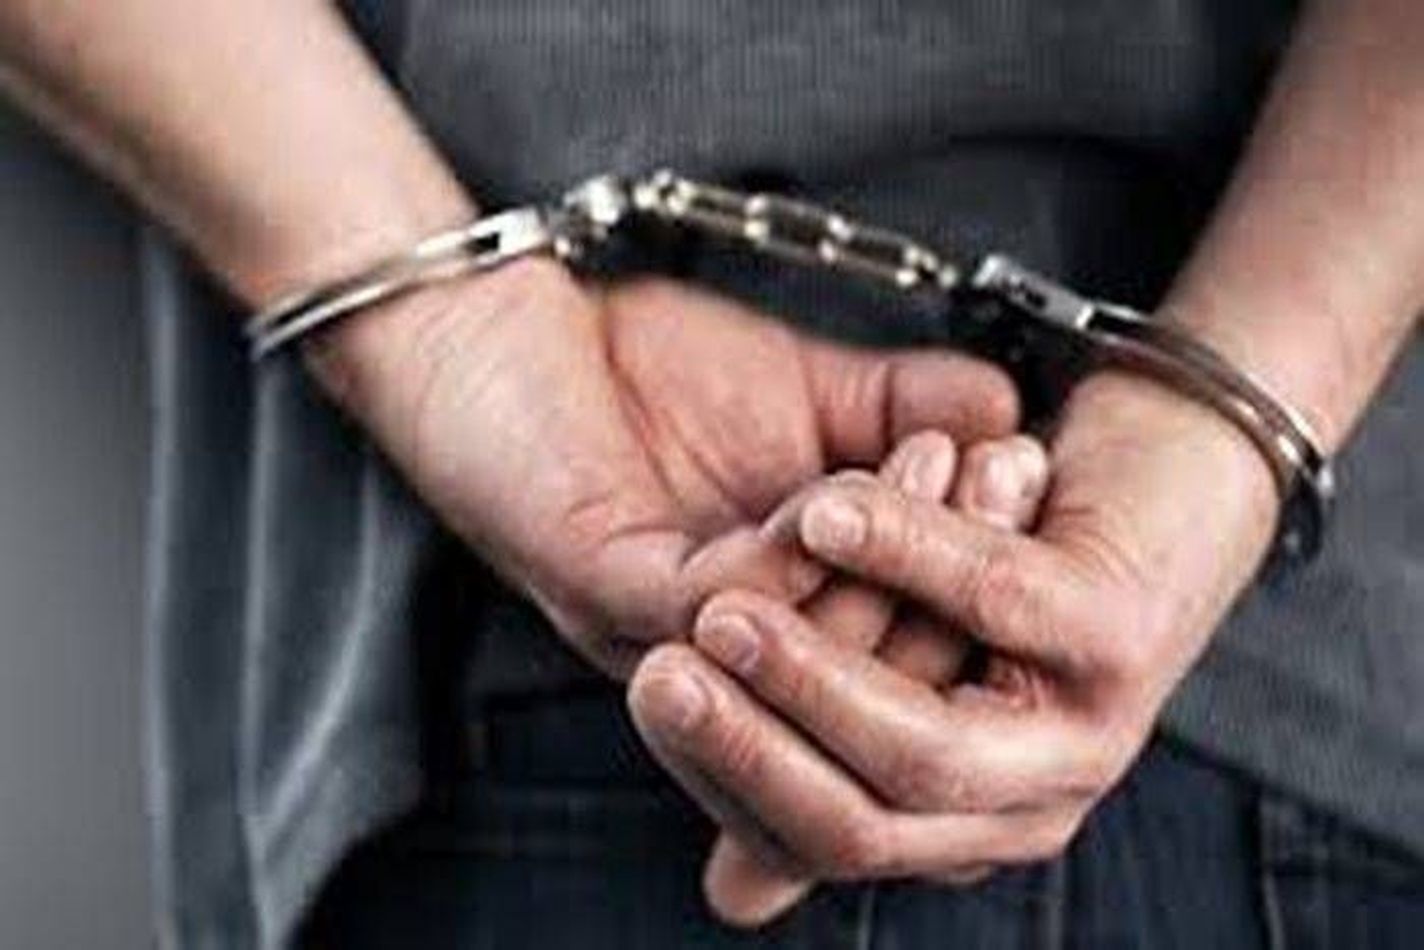 Accused of robbing car sent to jail